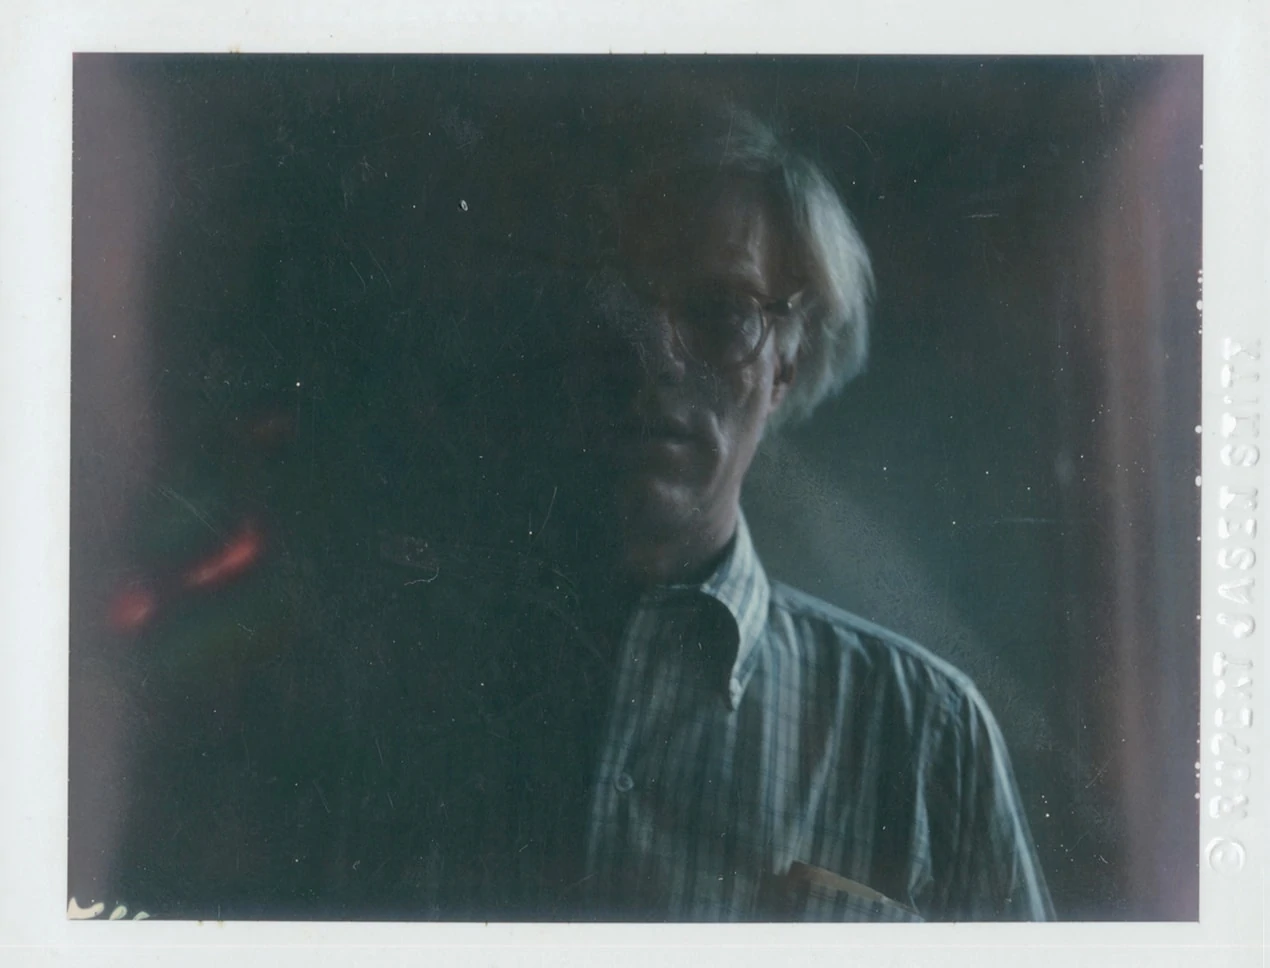 A self-portrait photograph of pop artist Andy Warhol